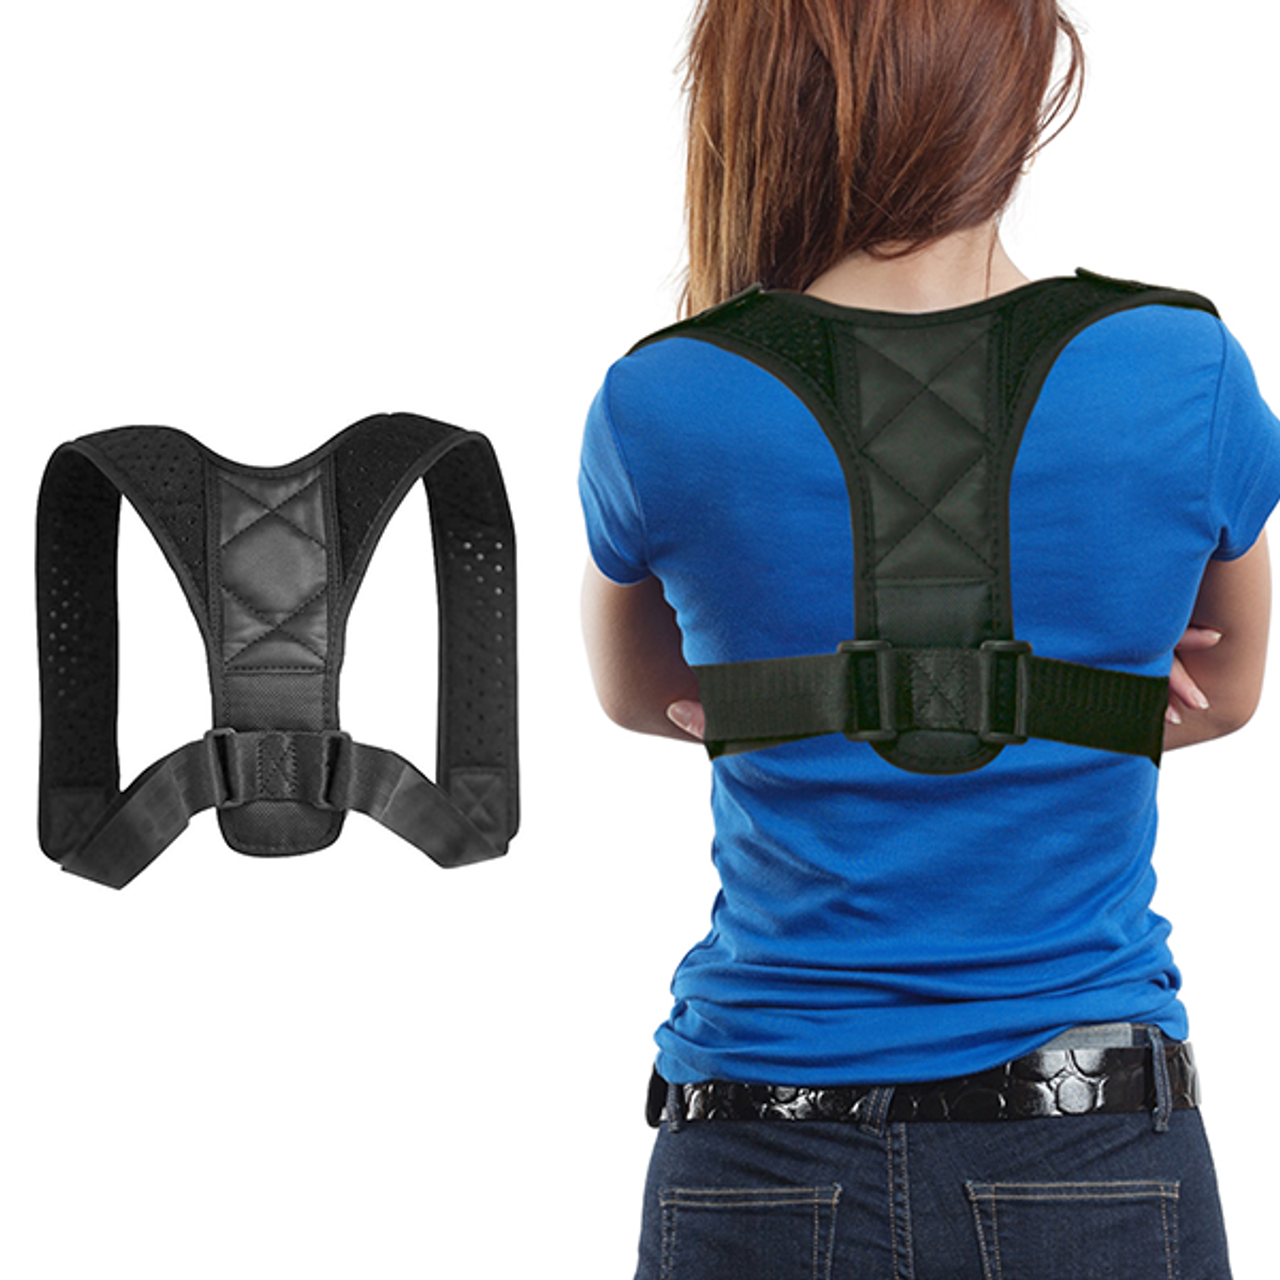 Adjustable Back Support & Posture Corrector product image